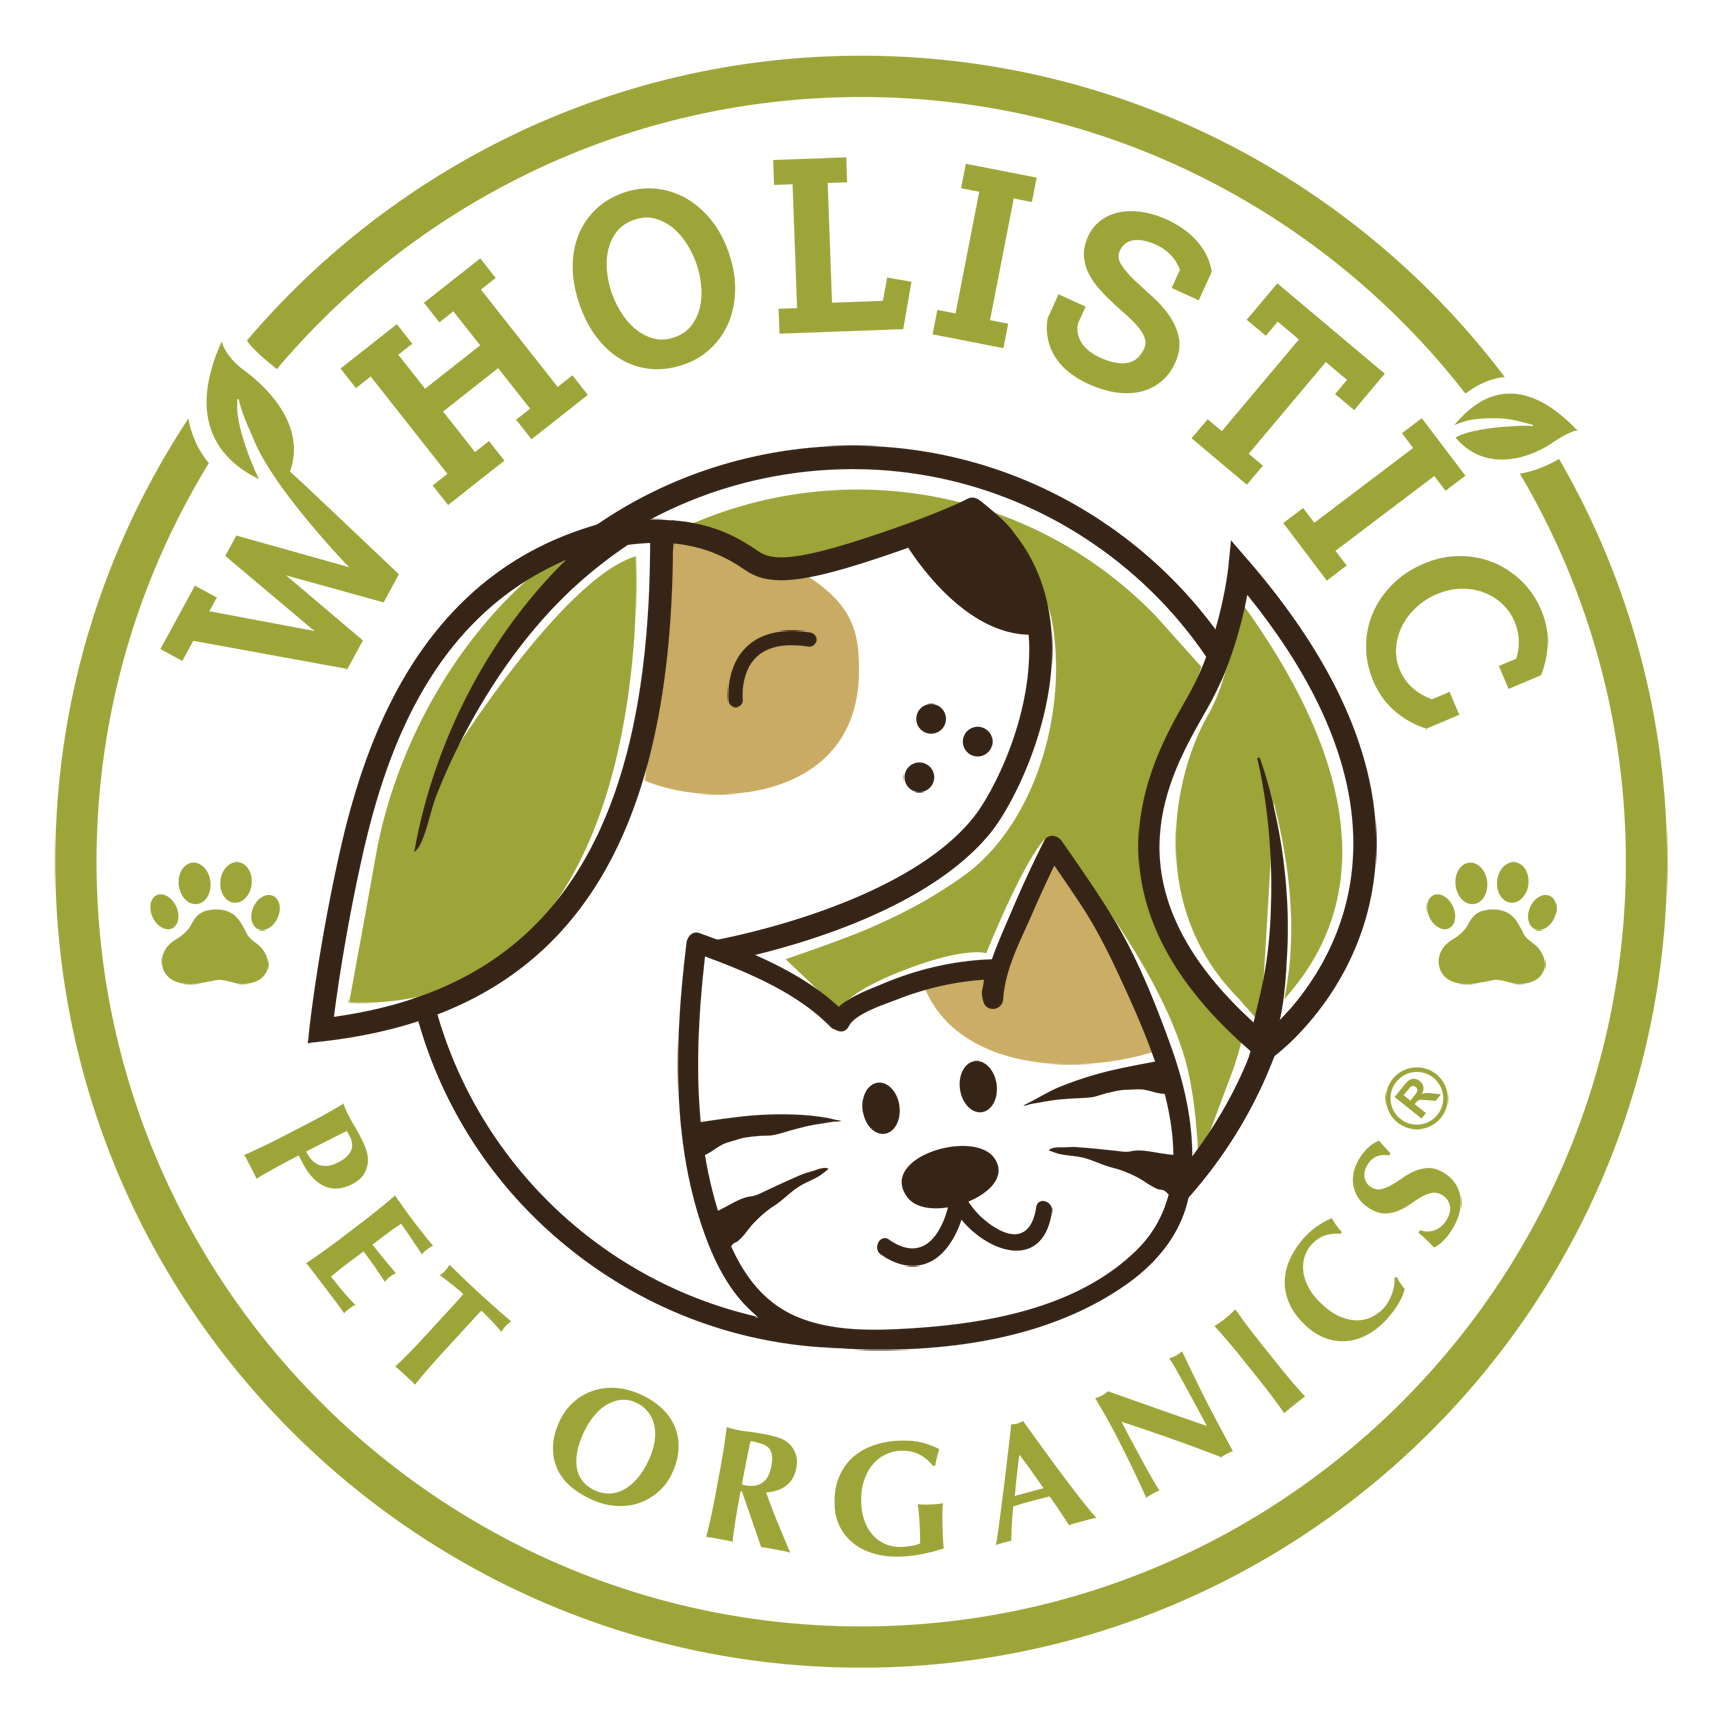 Wholistic Pet Organics Logo 